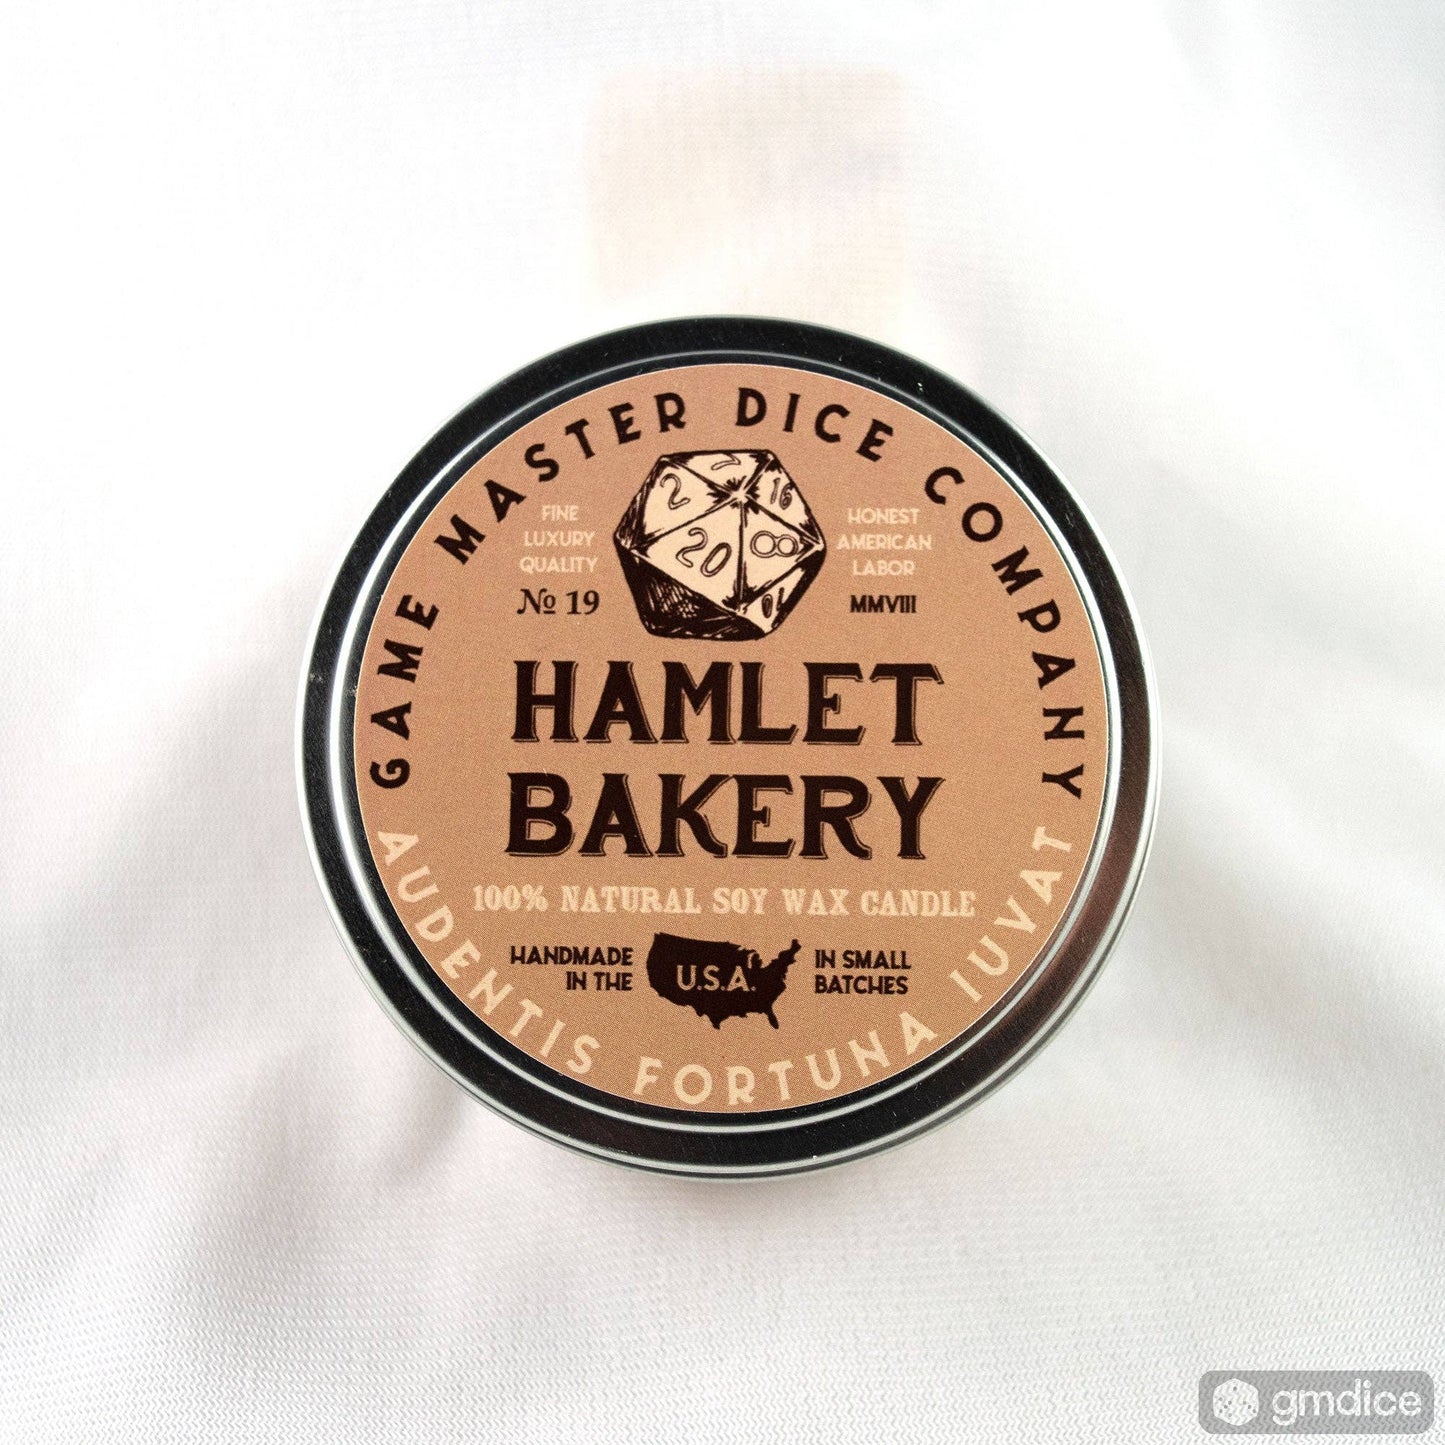 Hamlet Bakery Candle